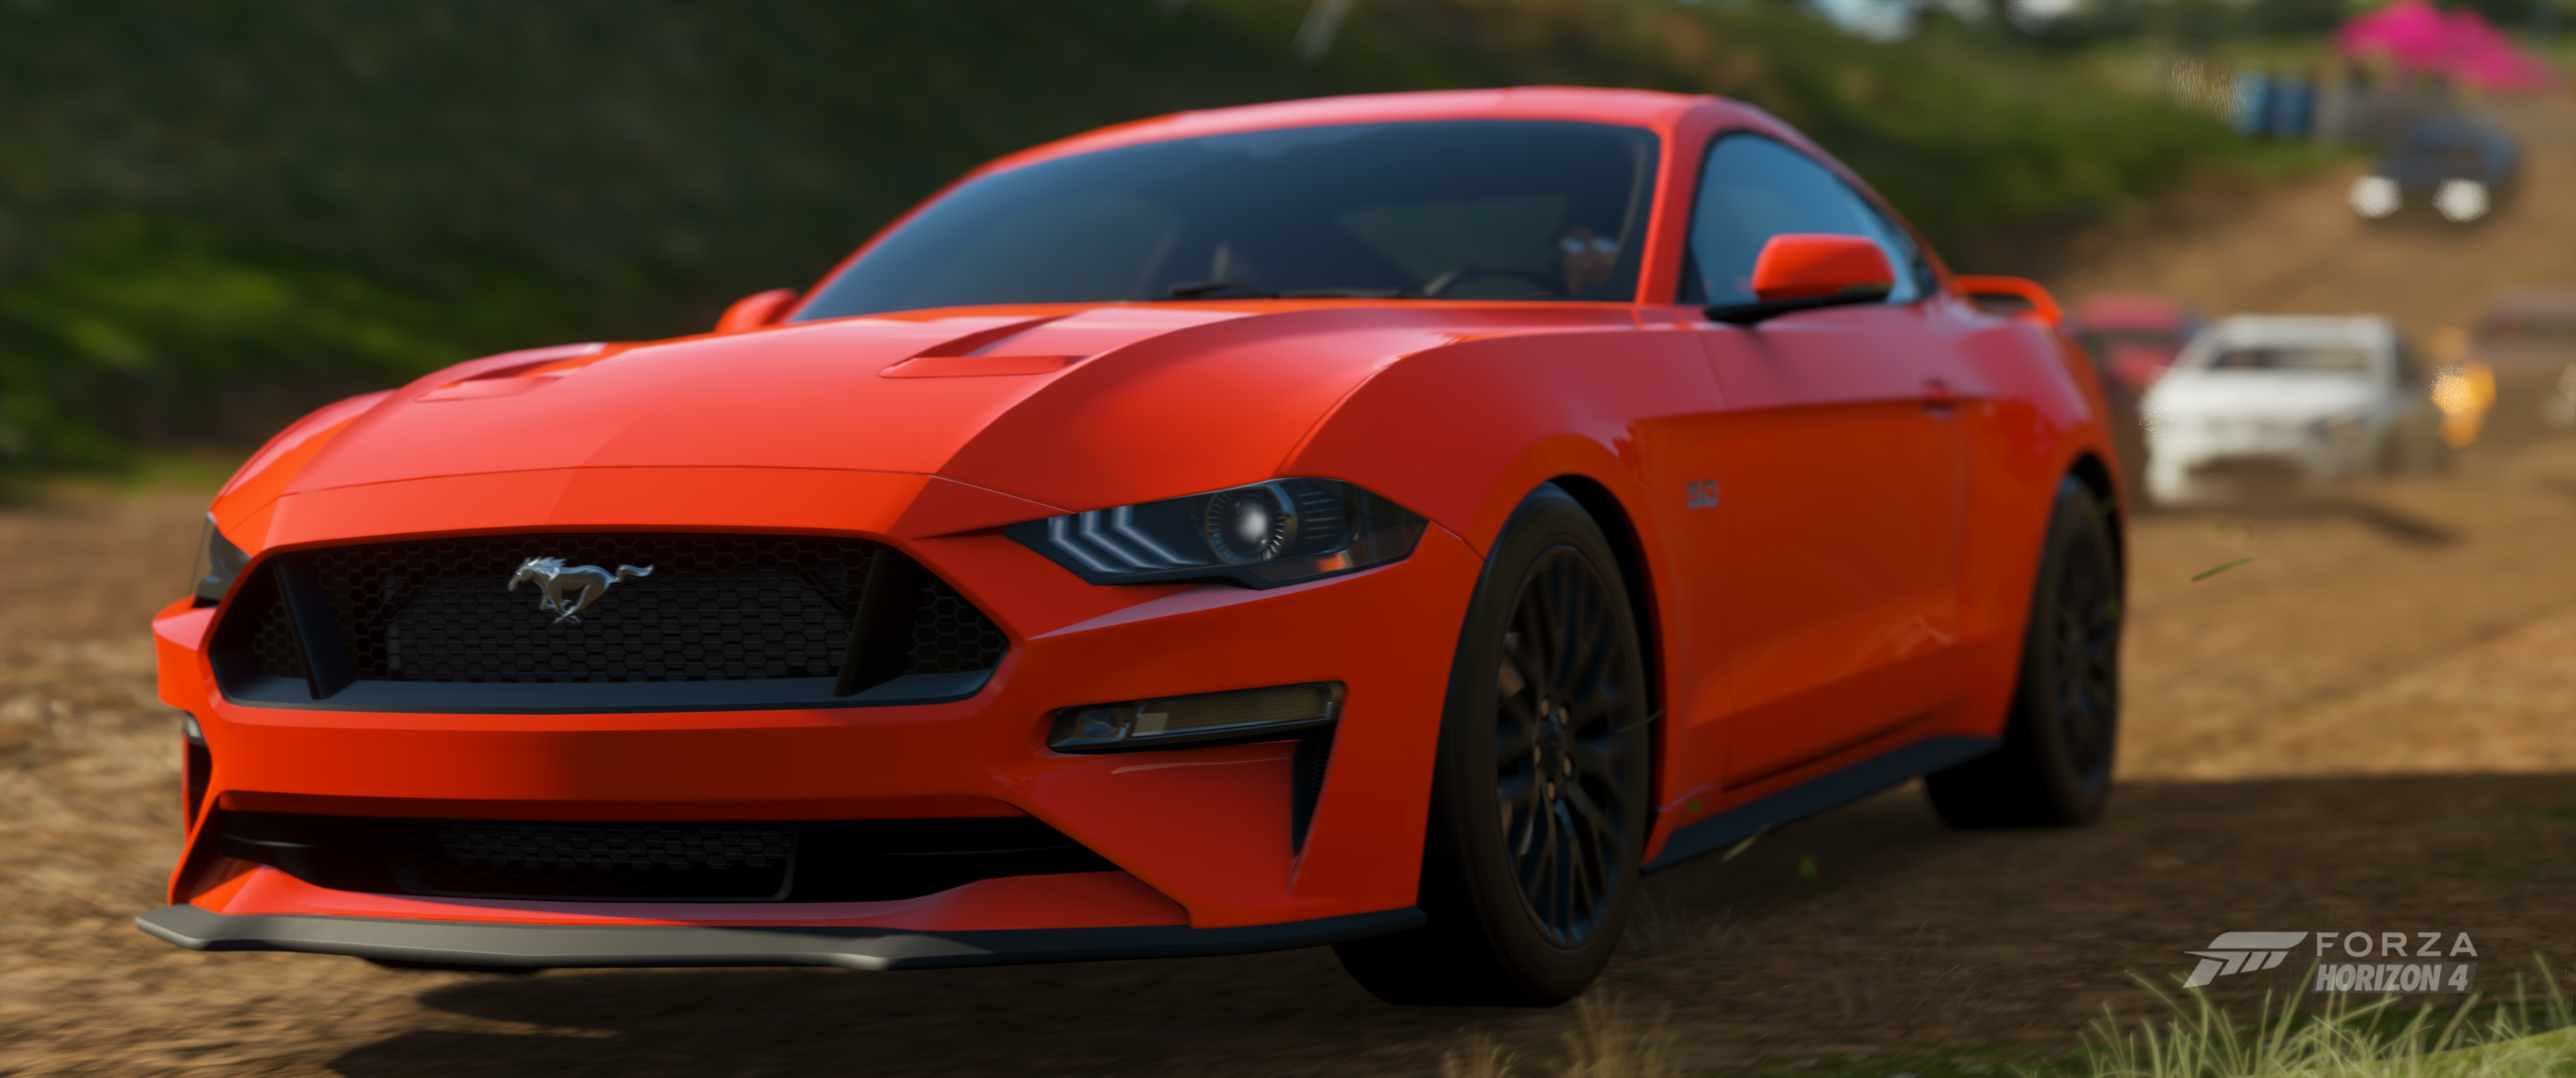 Forza Horizon 4 Forza Racing Video Games Ultrawide Ultrawide Gaming Car Ford Mustang GT 3440x1440